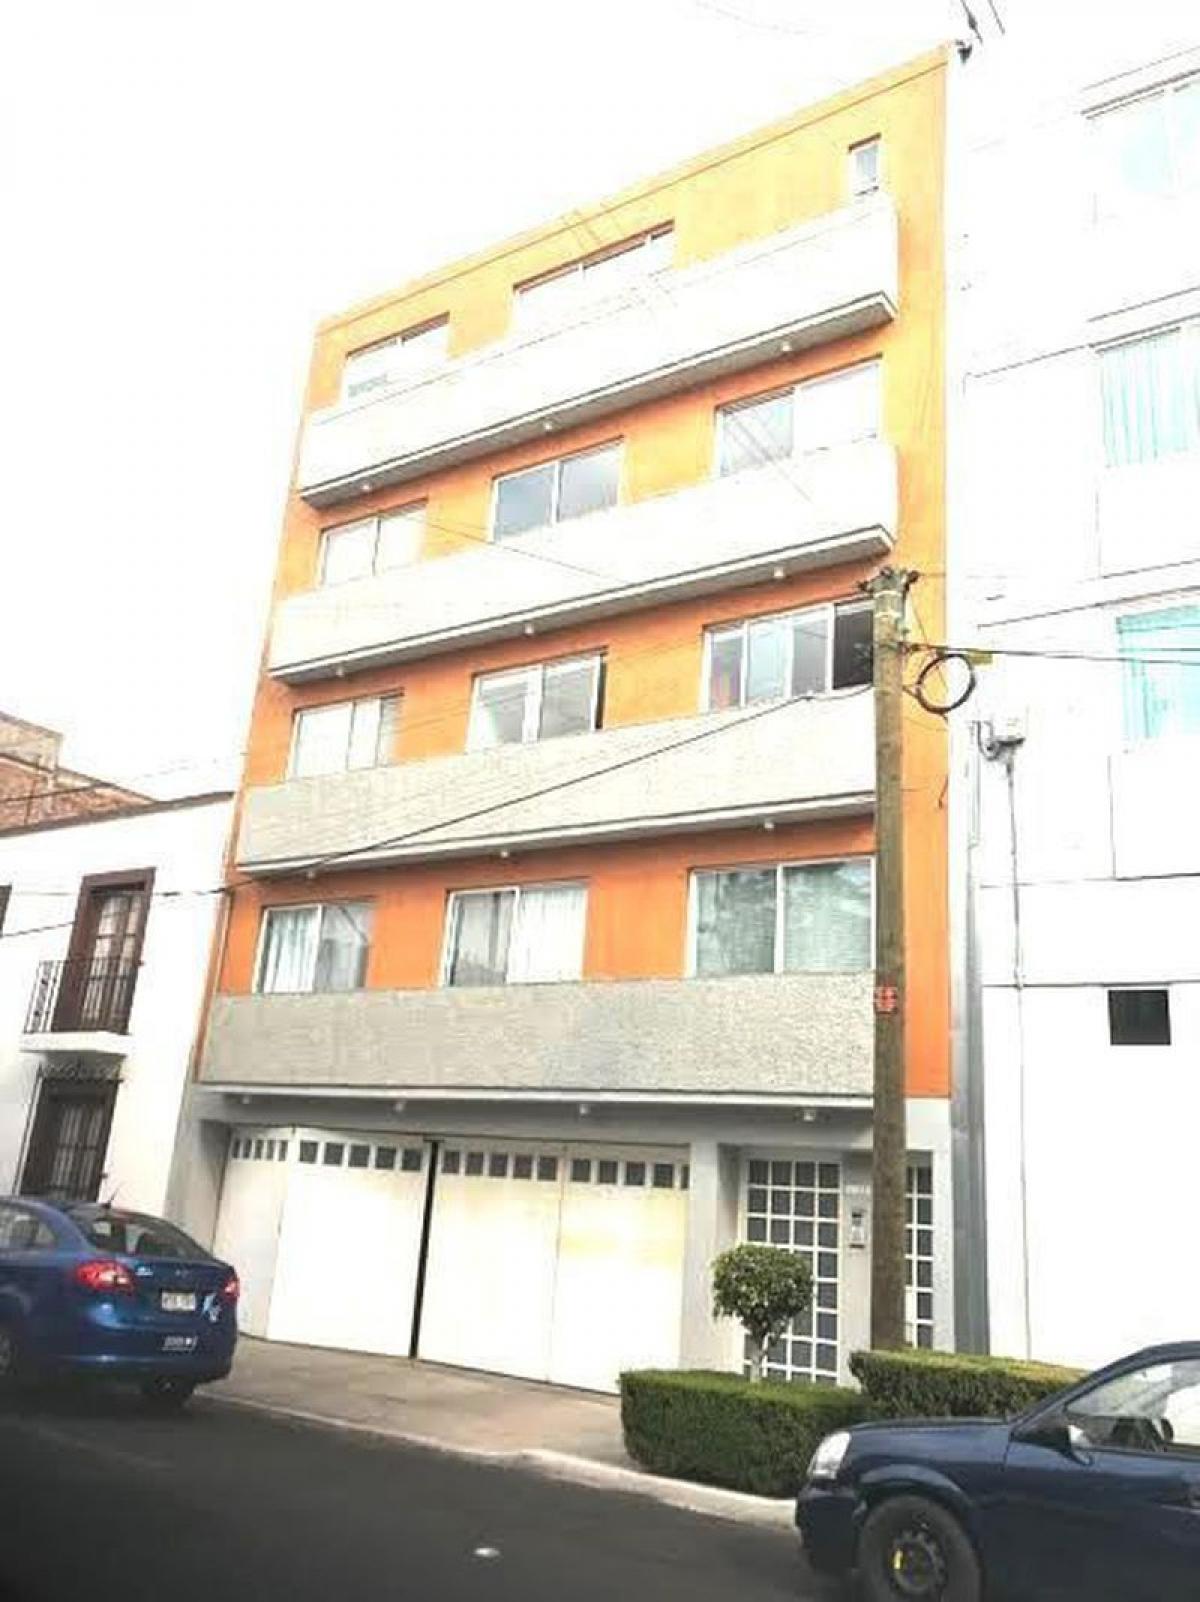 Picture of Apartment For Sale in Distrito Federal, Mexico City, Mexico